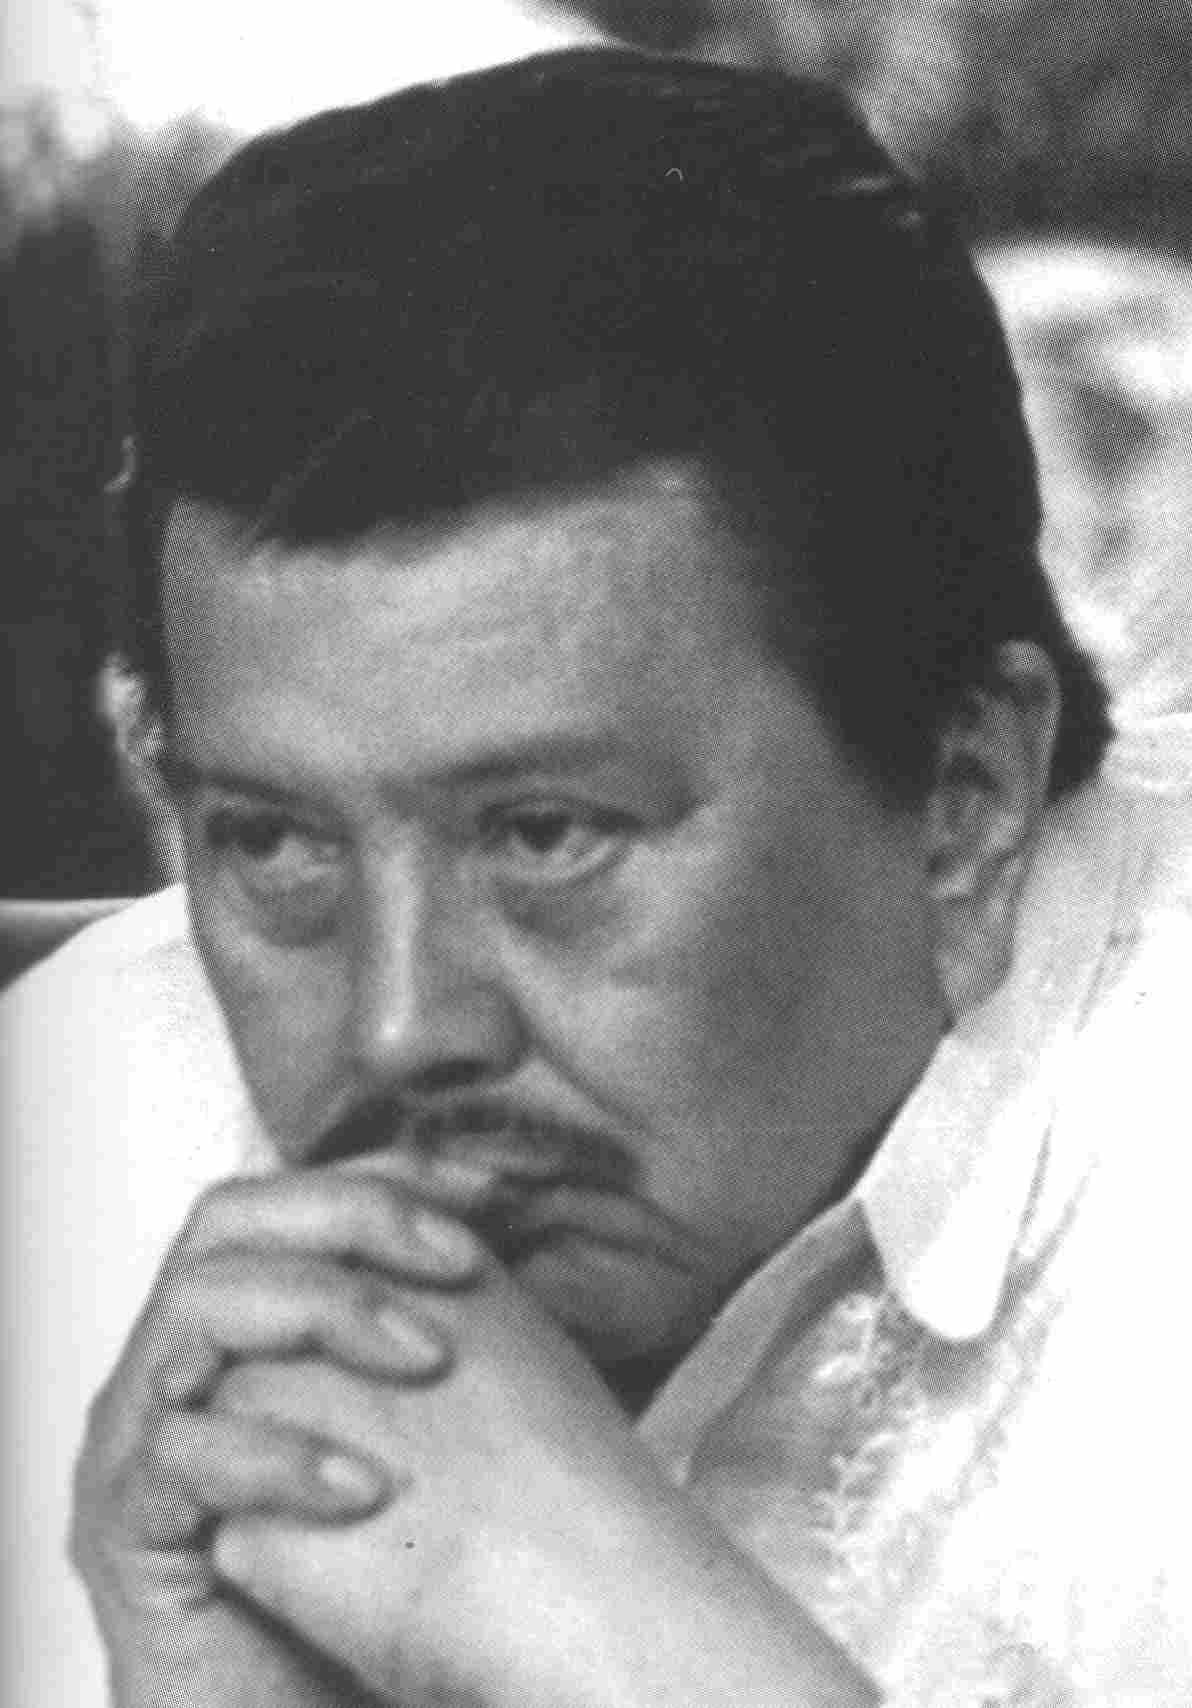 JOSEPH EJERCITO ESTRADA (1998-2001) - erap